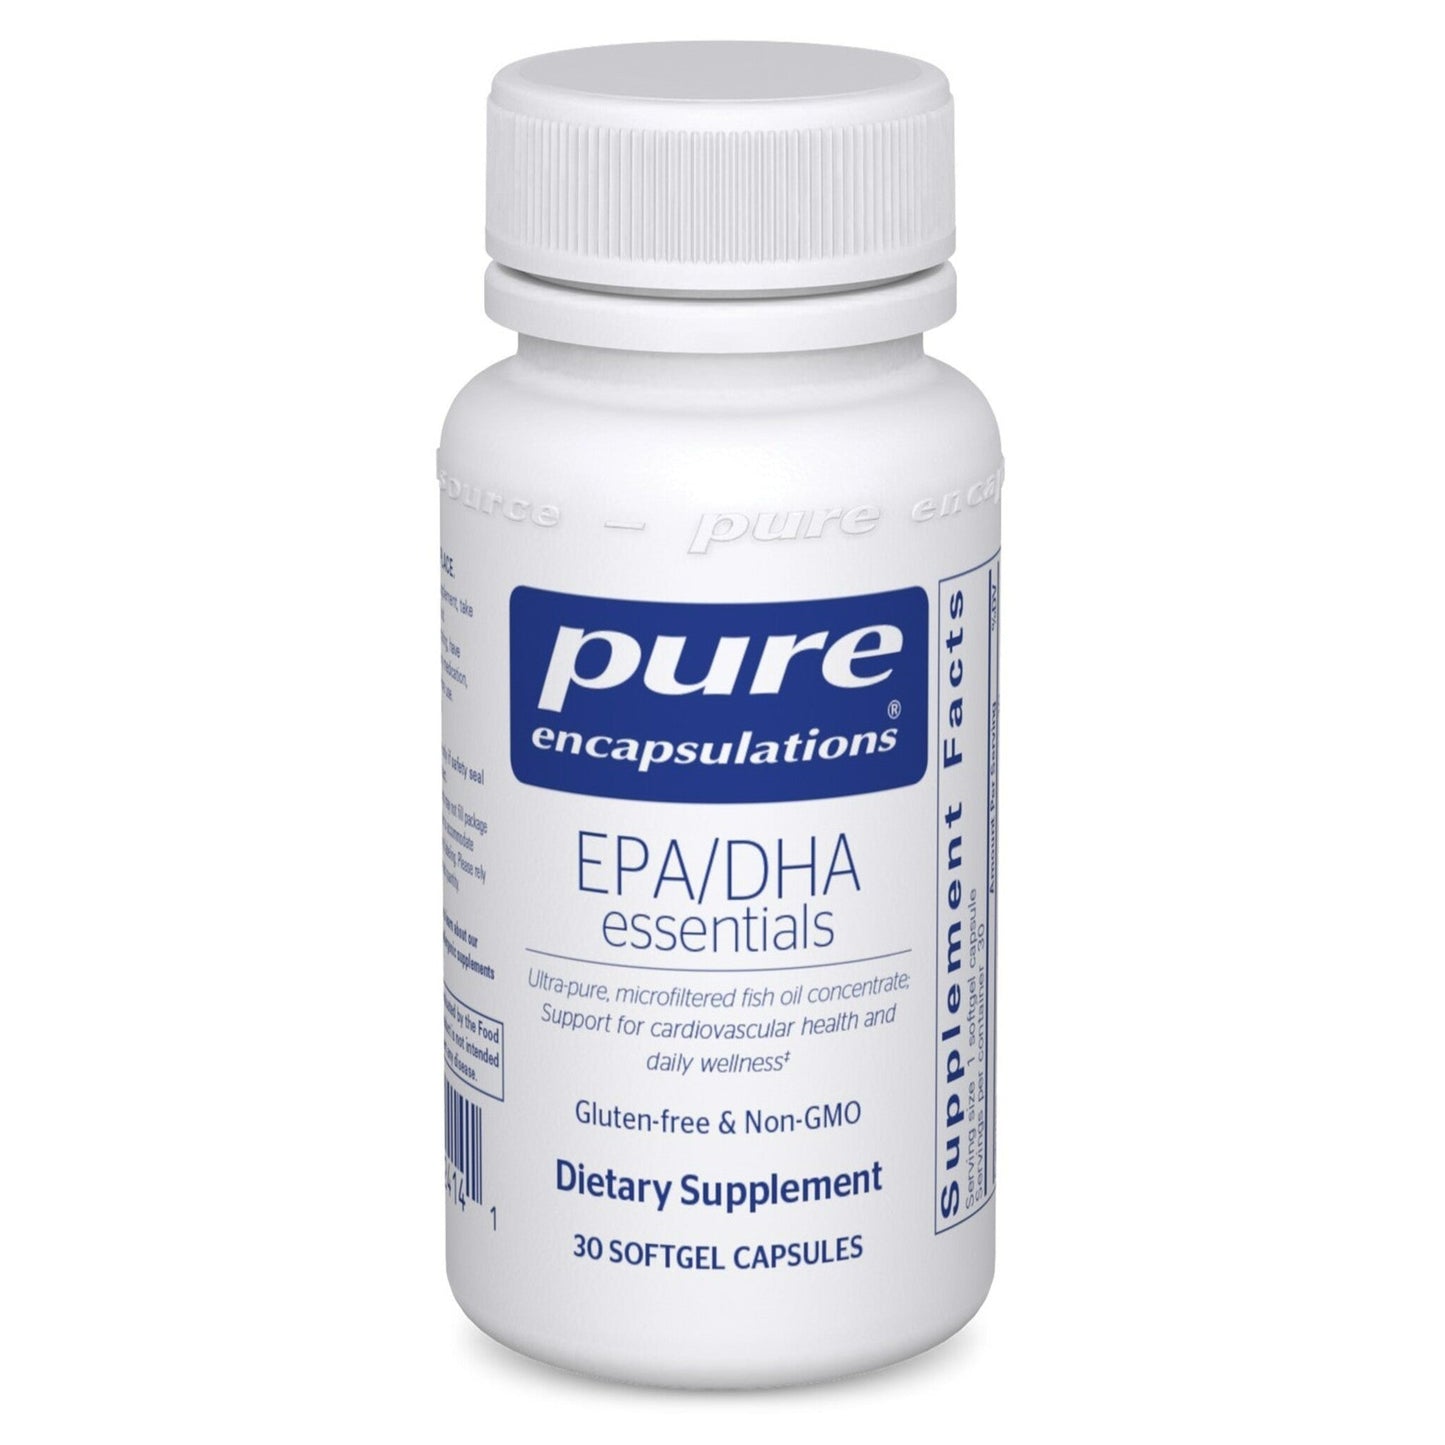 EPA/DHA essentials 1,000 mg.